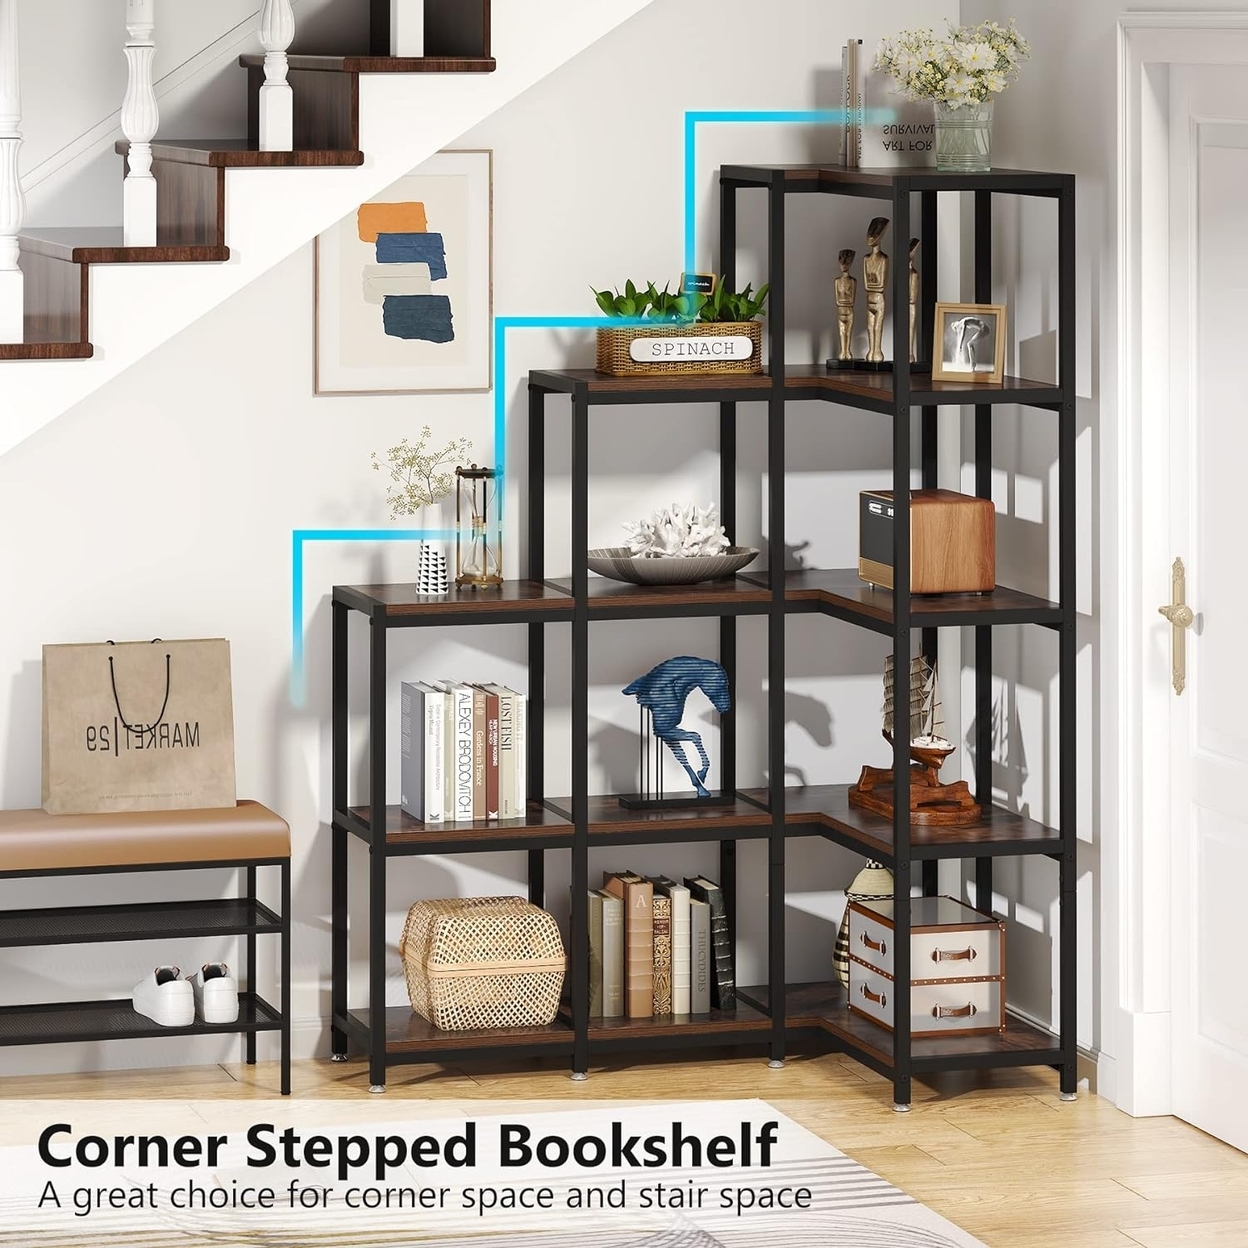 Tribesigns 63 5-Tier Corner Bookshelf, L-Shaped Stepped Etagere Bookcase Display Rack Storage Shelf